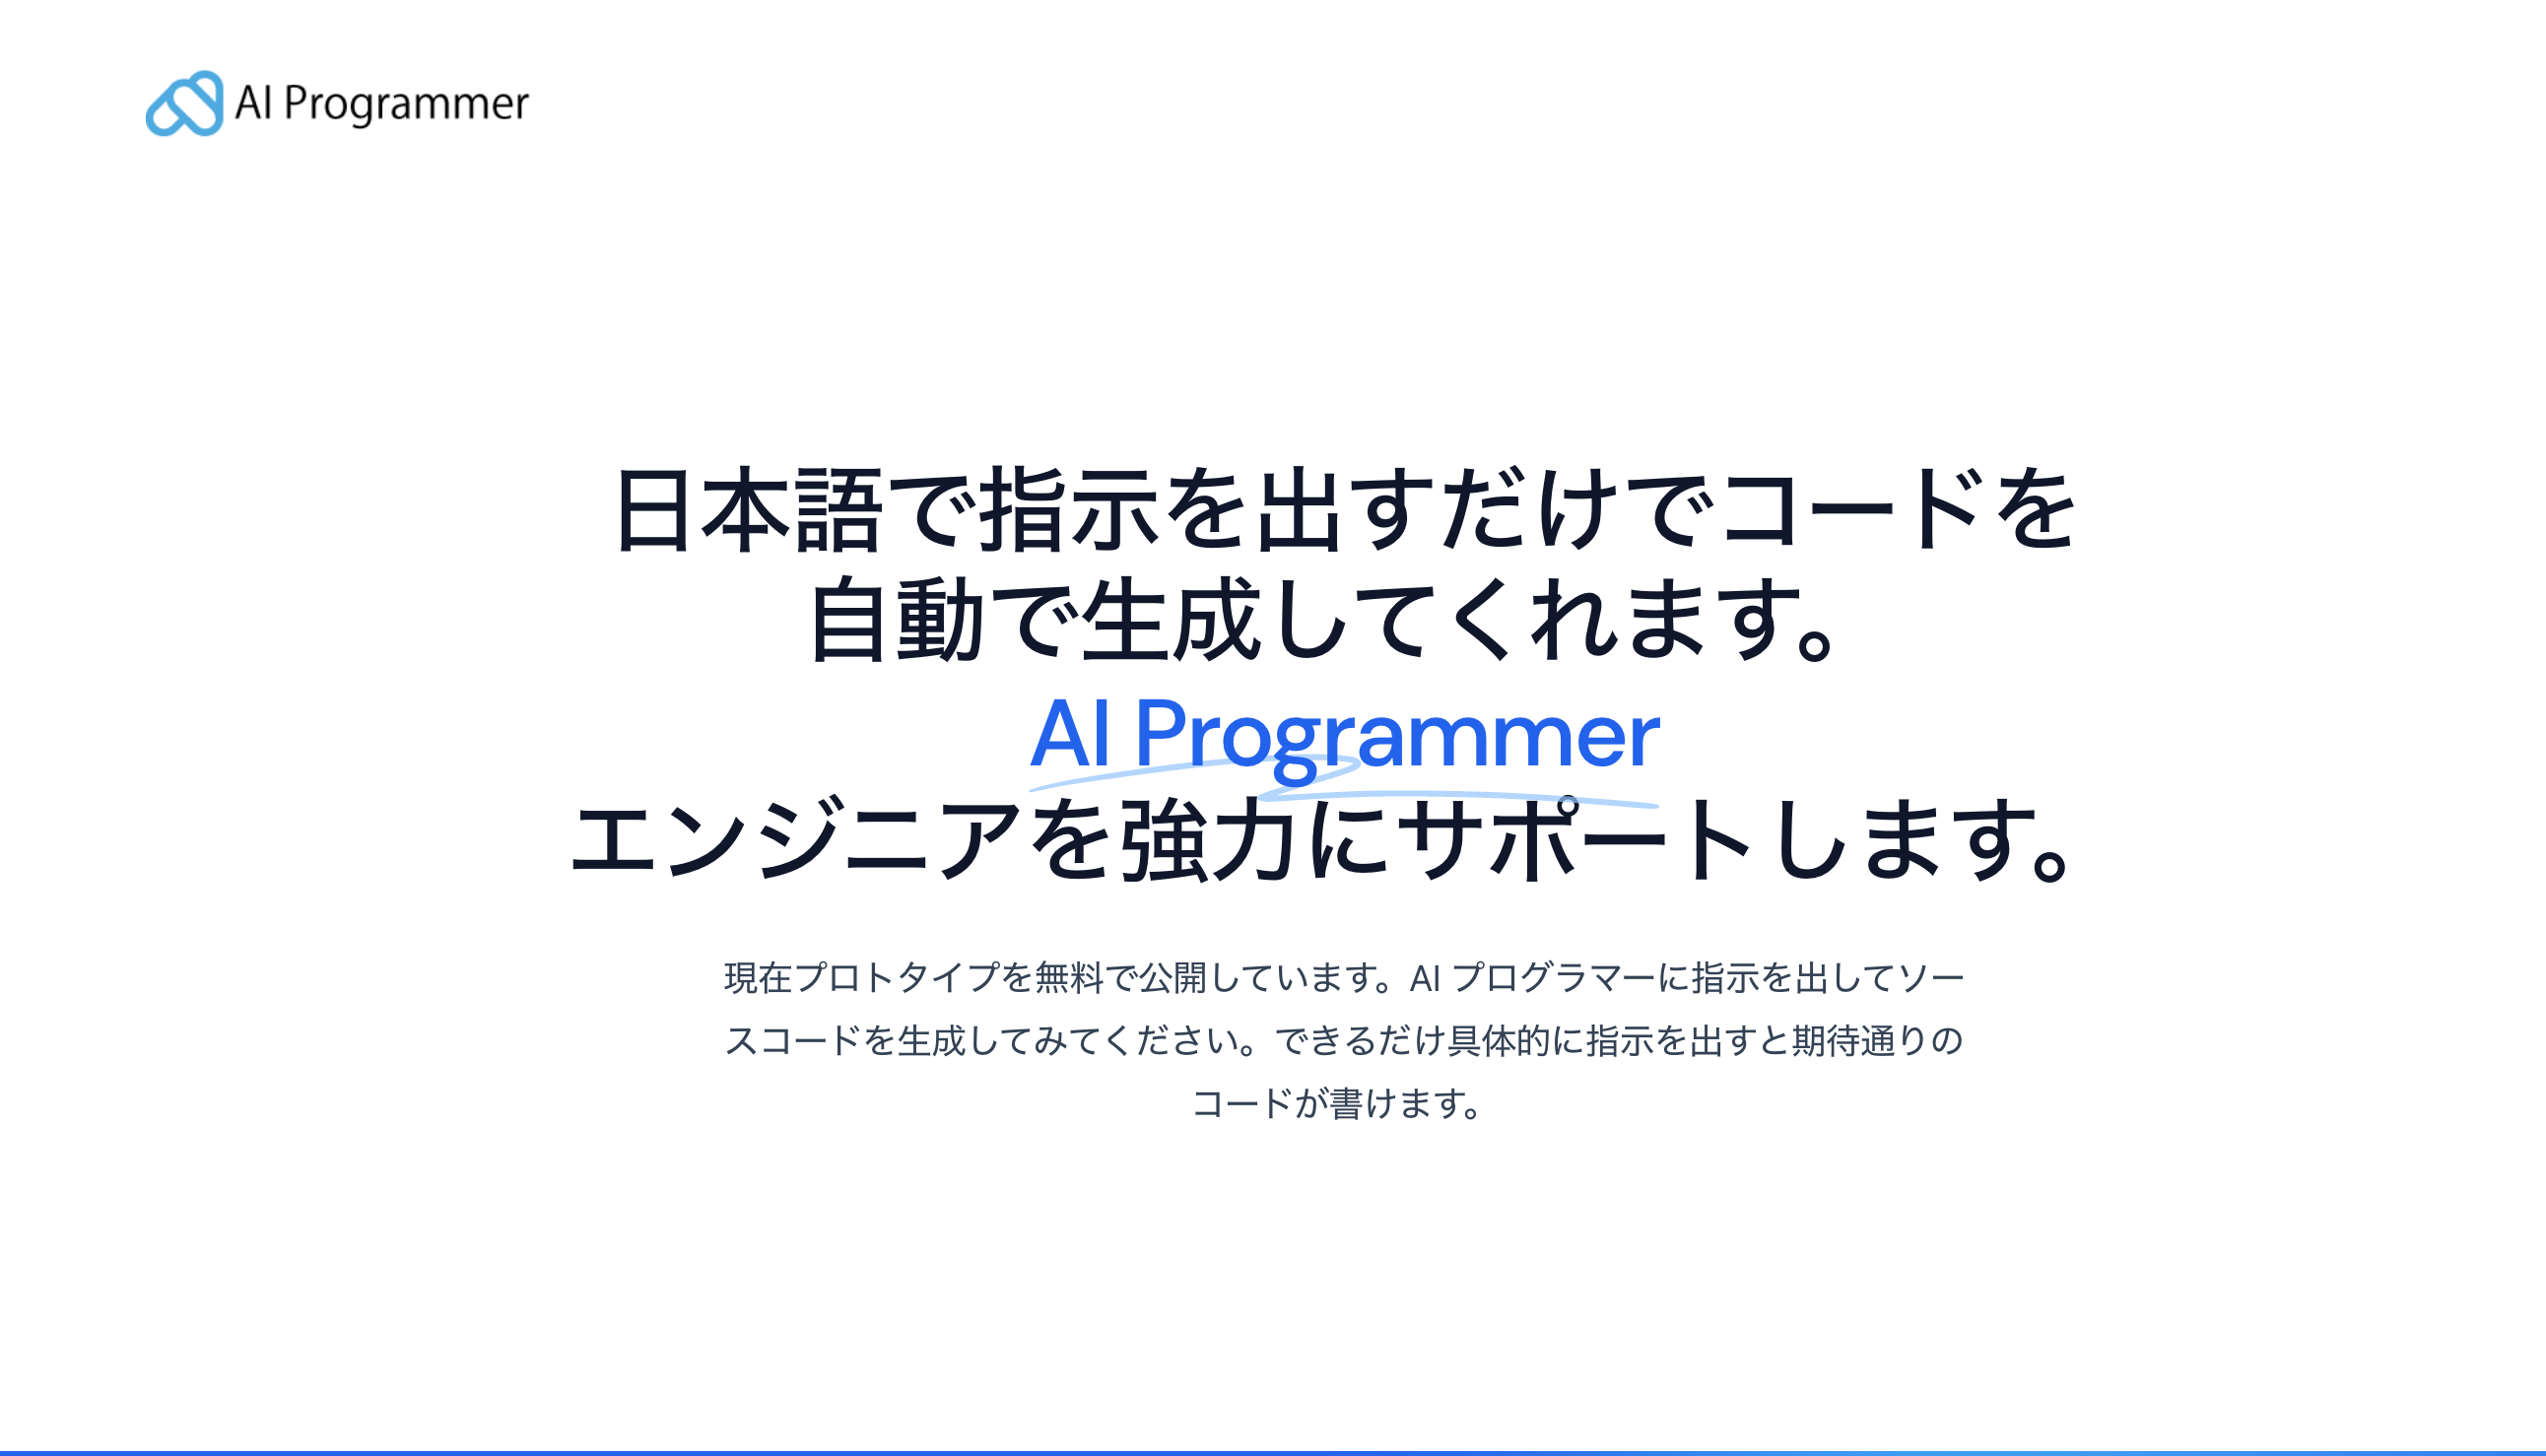 AI Programmer